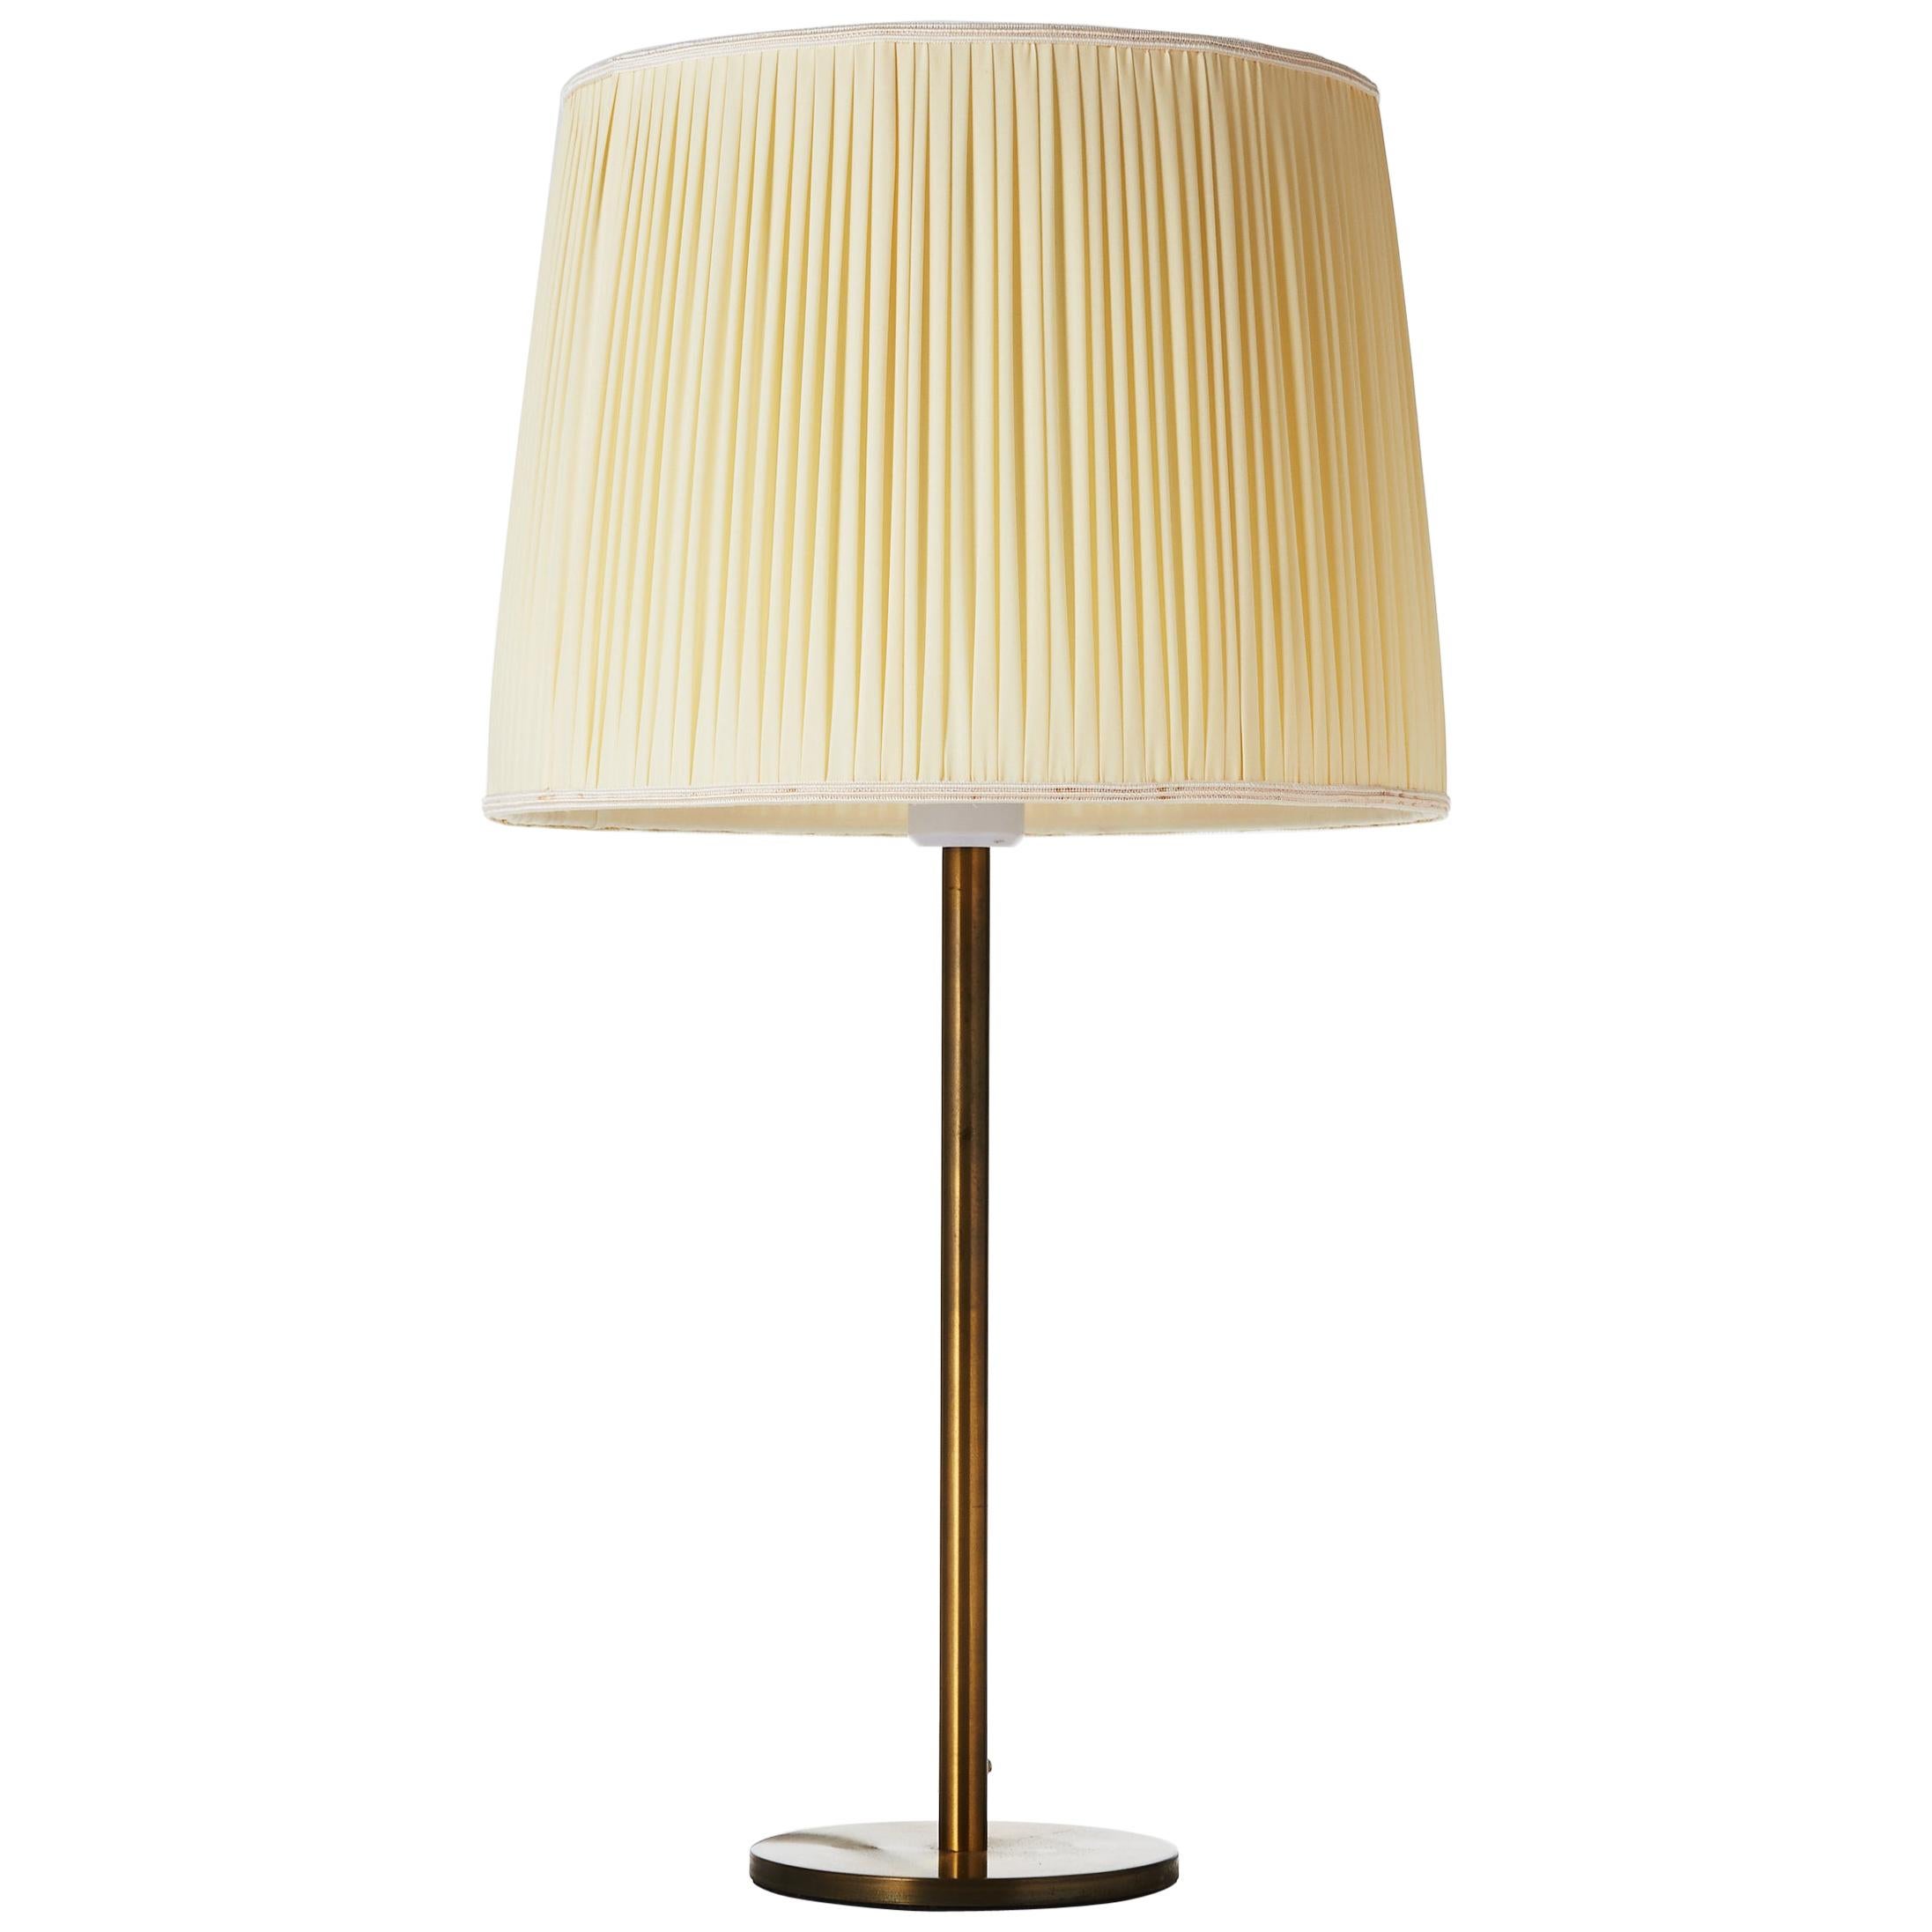 Uno & Östen Kristiansson Table Lamp for Luxus, 1960s